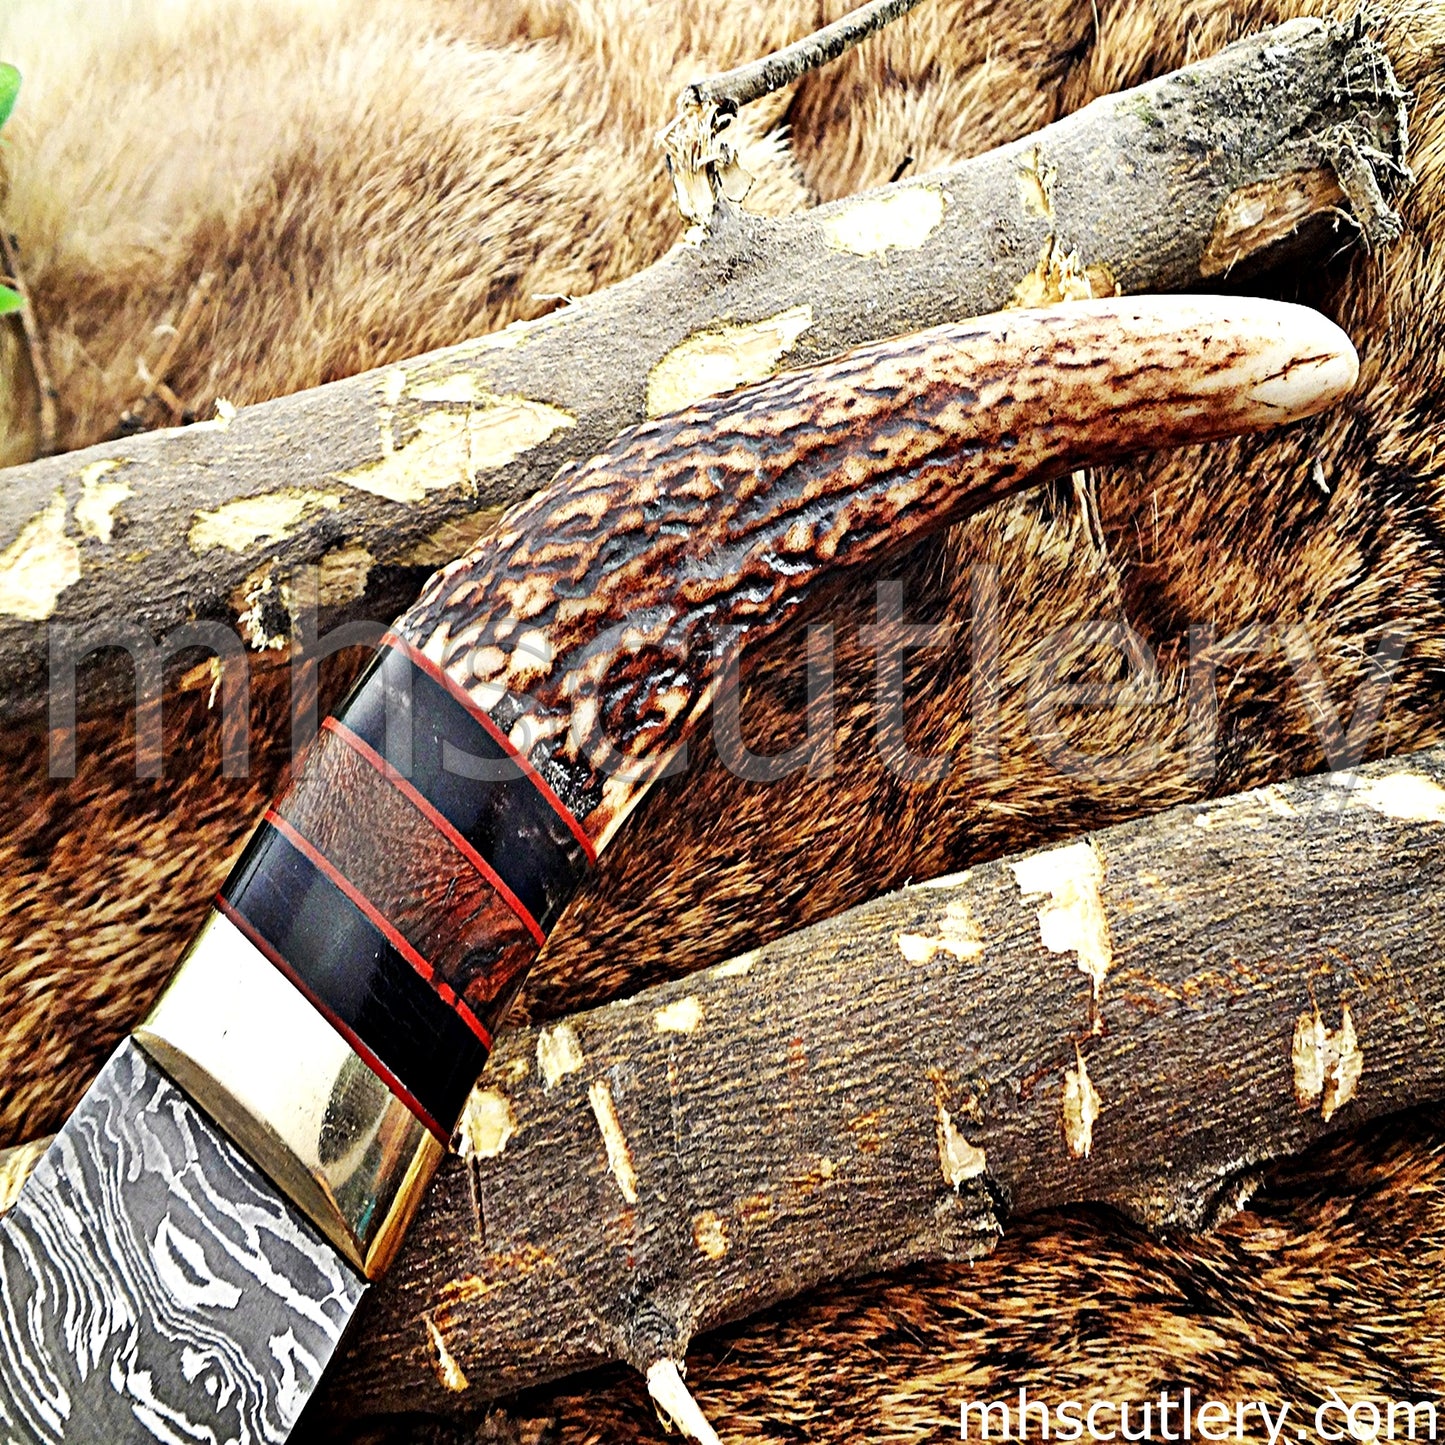 Handmade Damascus Steel Hunting Kukri Knife With Antler Handle | mhscutlery